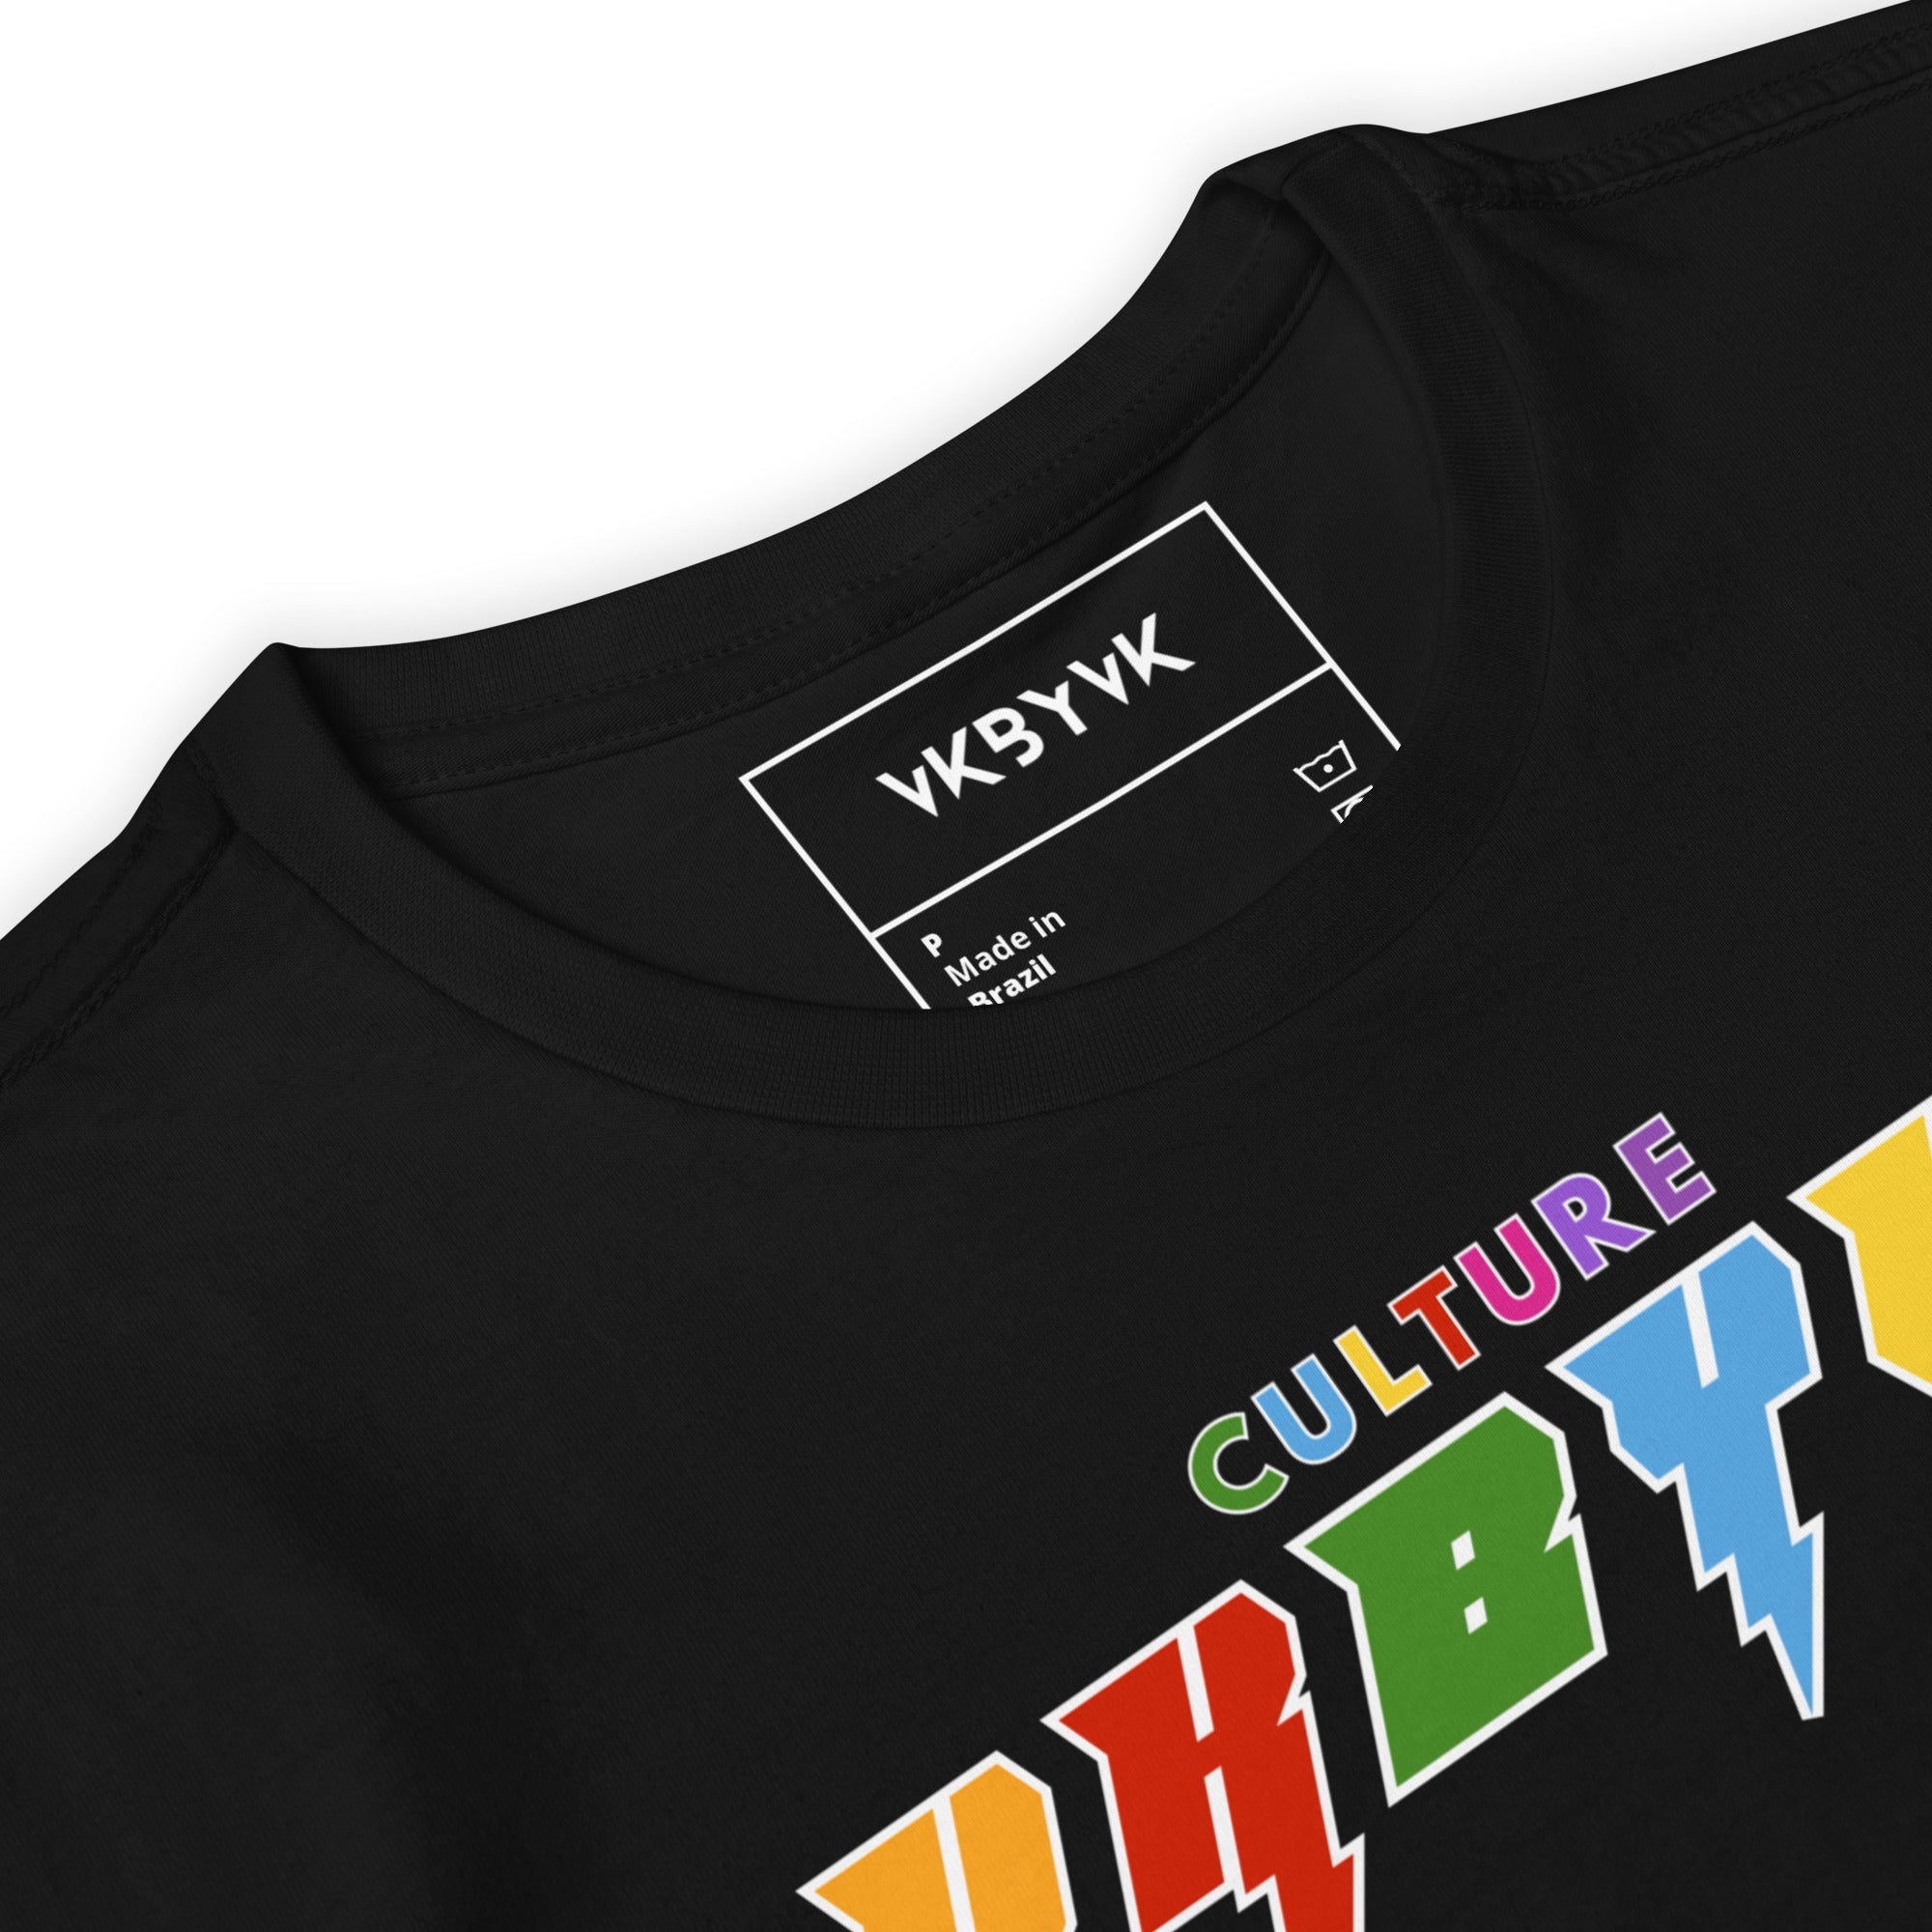 Camiseta Culture VK by VK